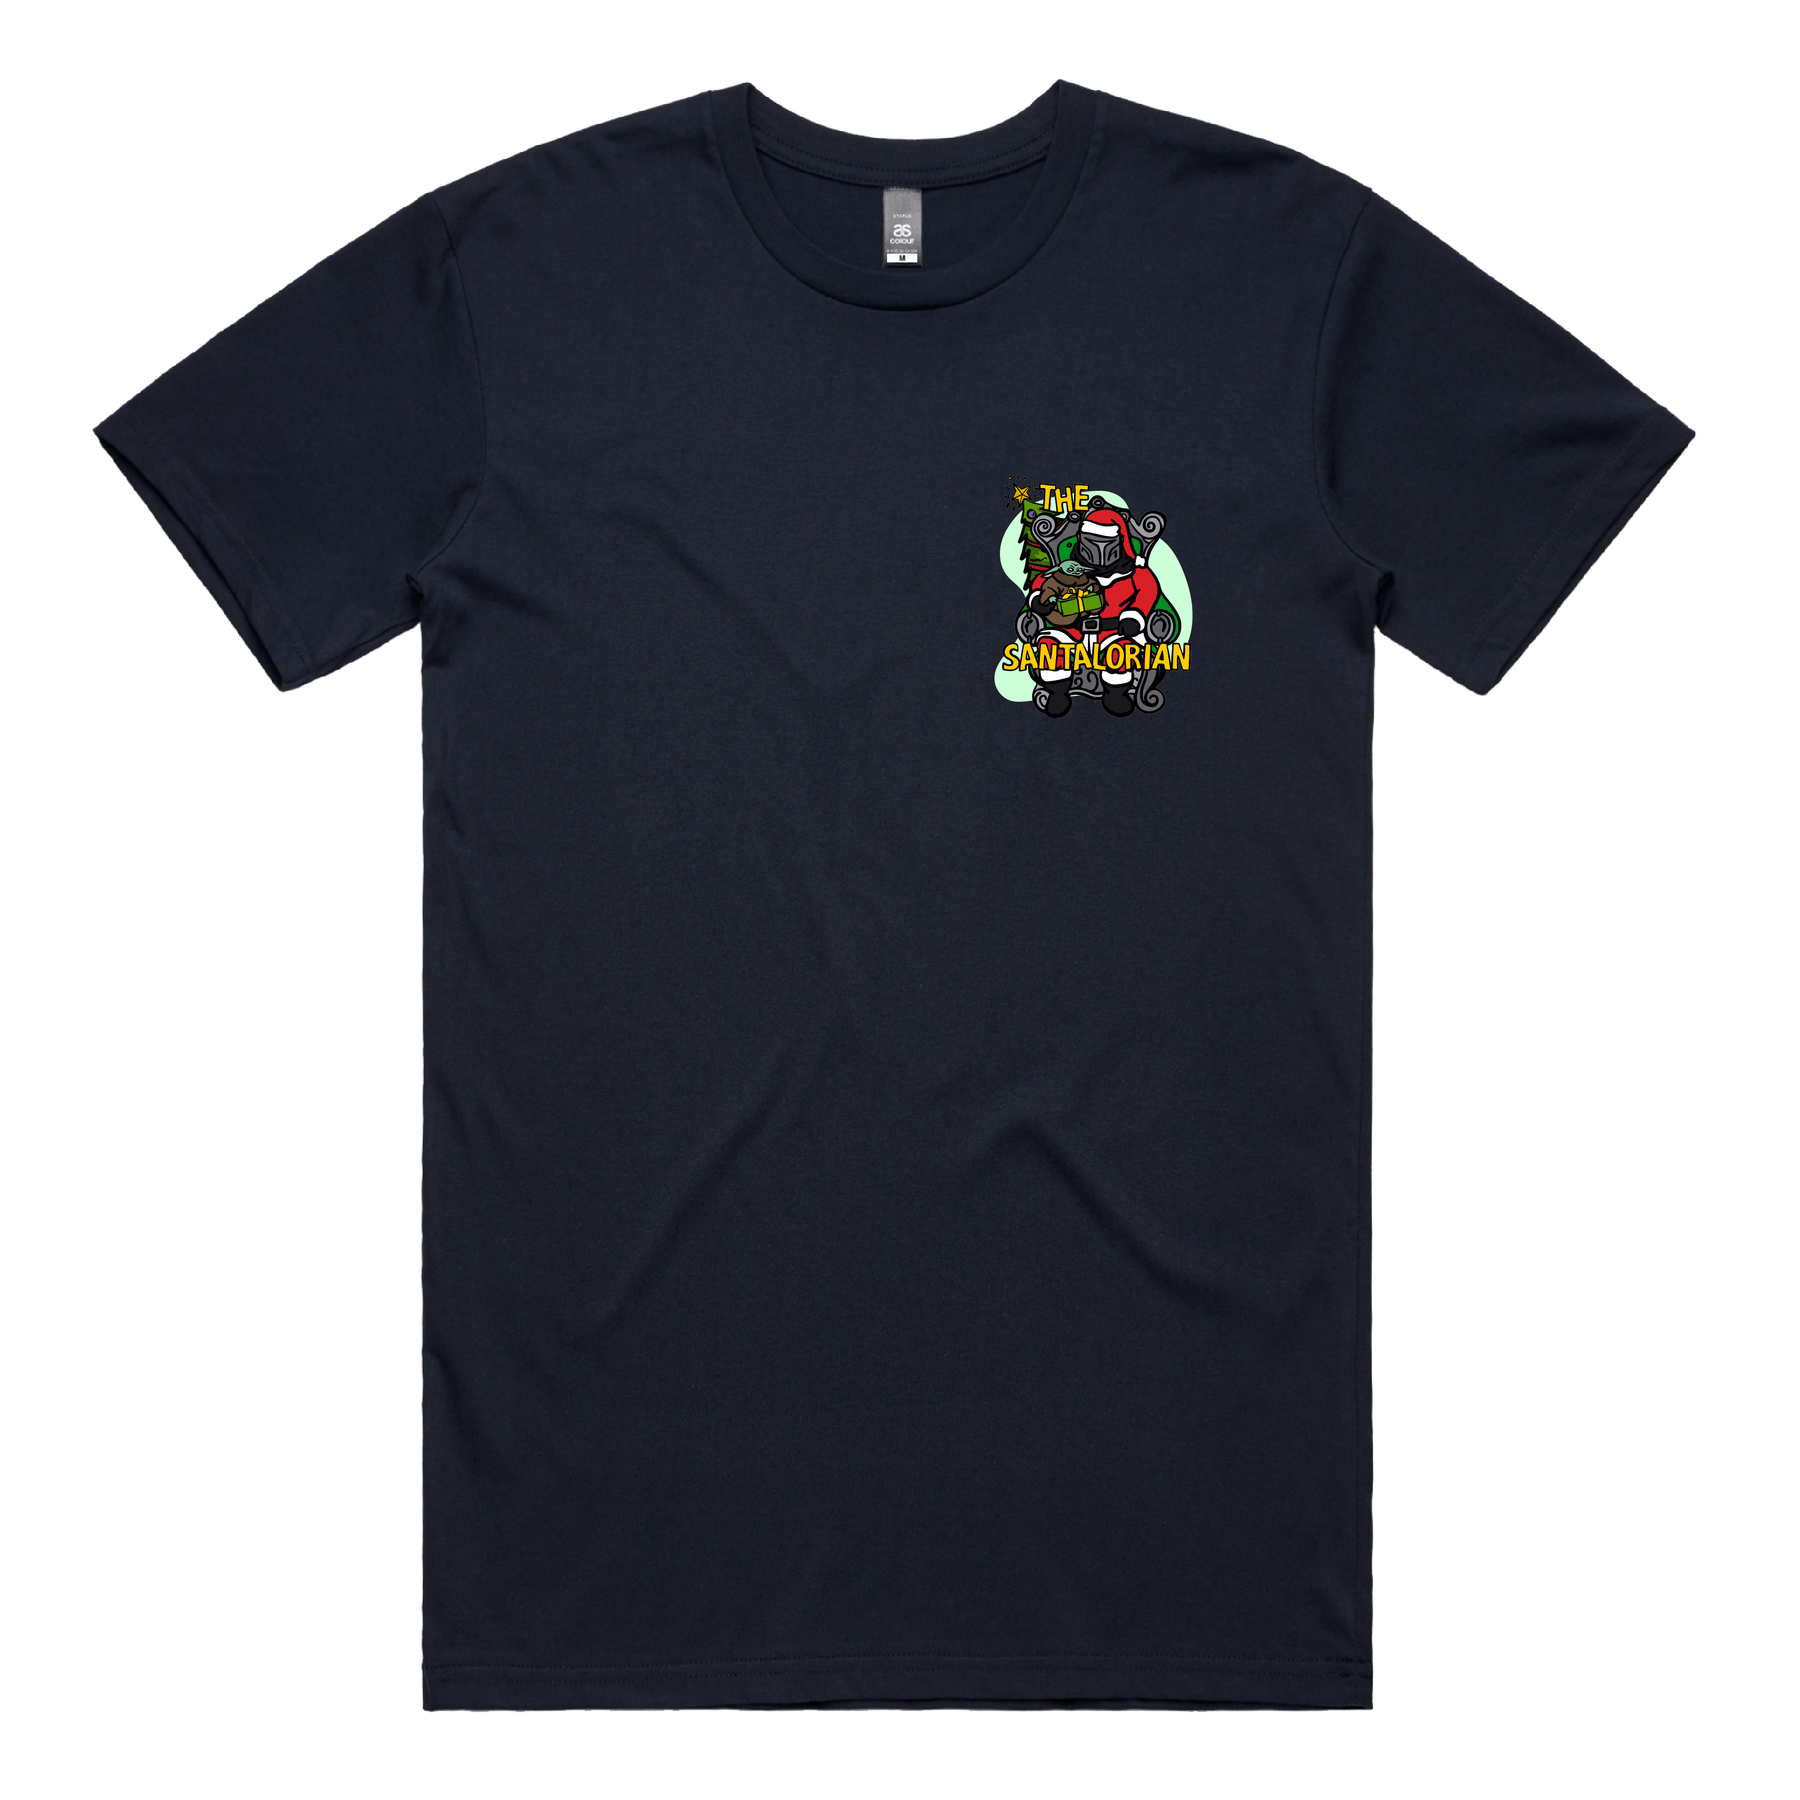 S / Navy / Small Front Design The Santalorian 👽🎅 - Men's T Shirt